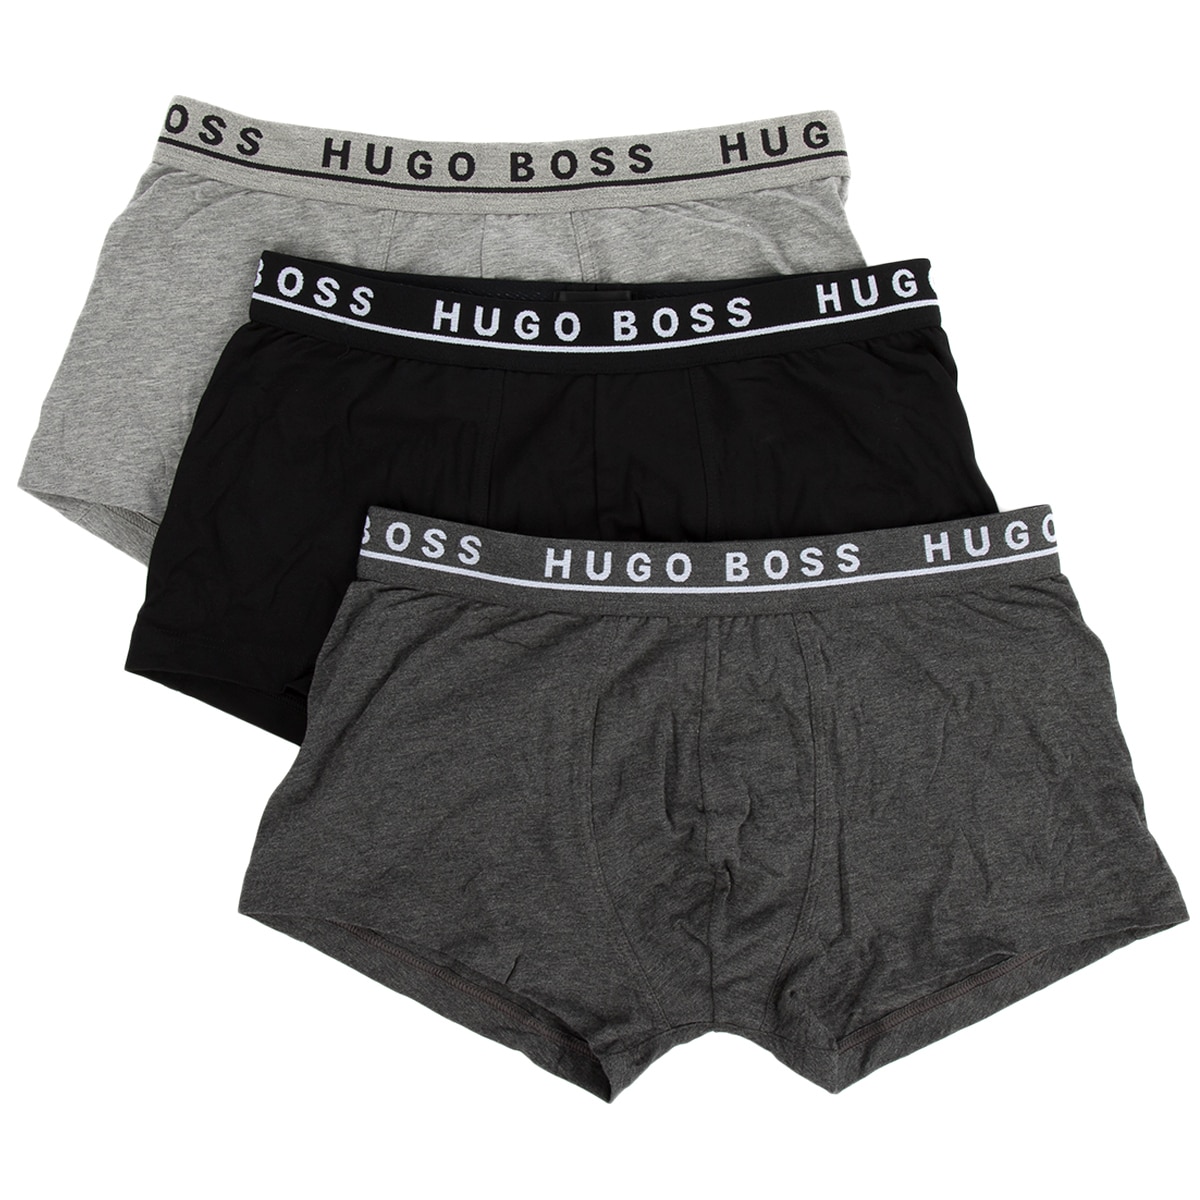 Hugo Boss Men's Trunks 3pk Grey, Charcoal & Black | Costc...